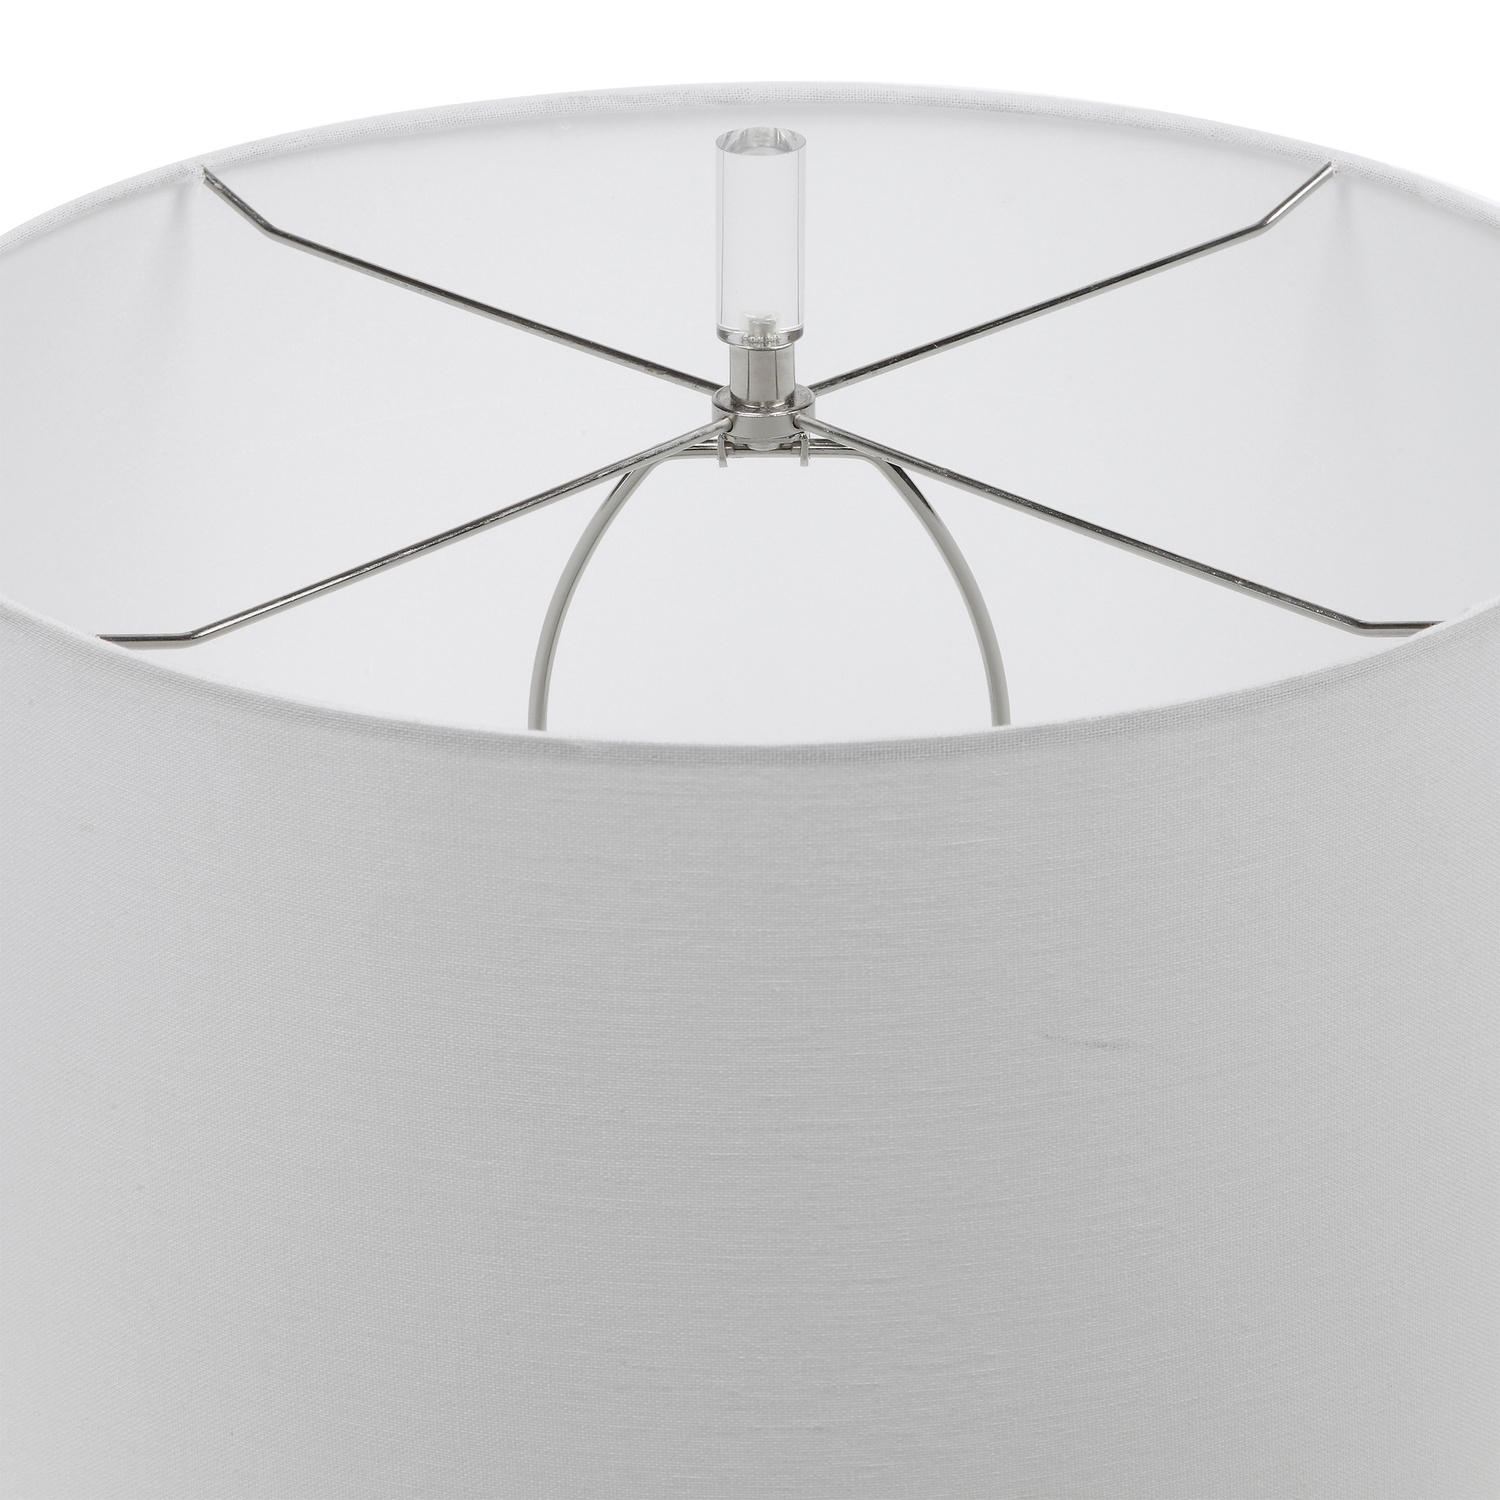 Rialta-Coastal Table Lamp